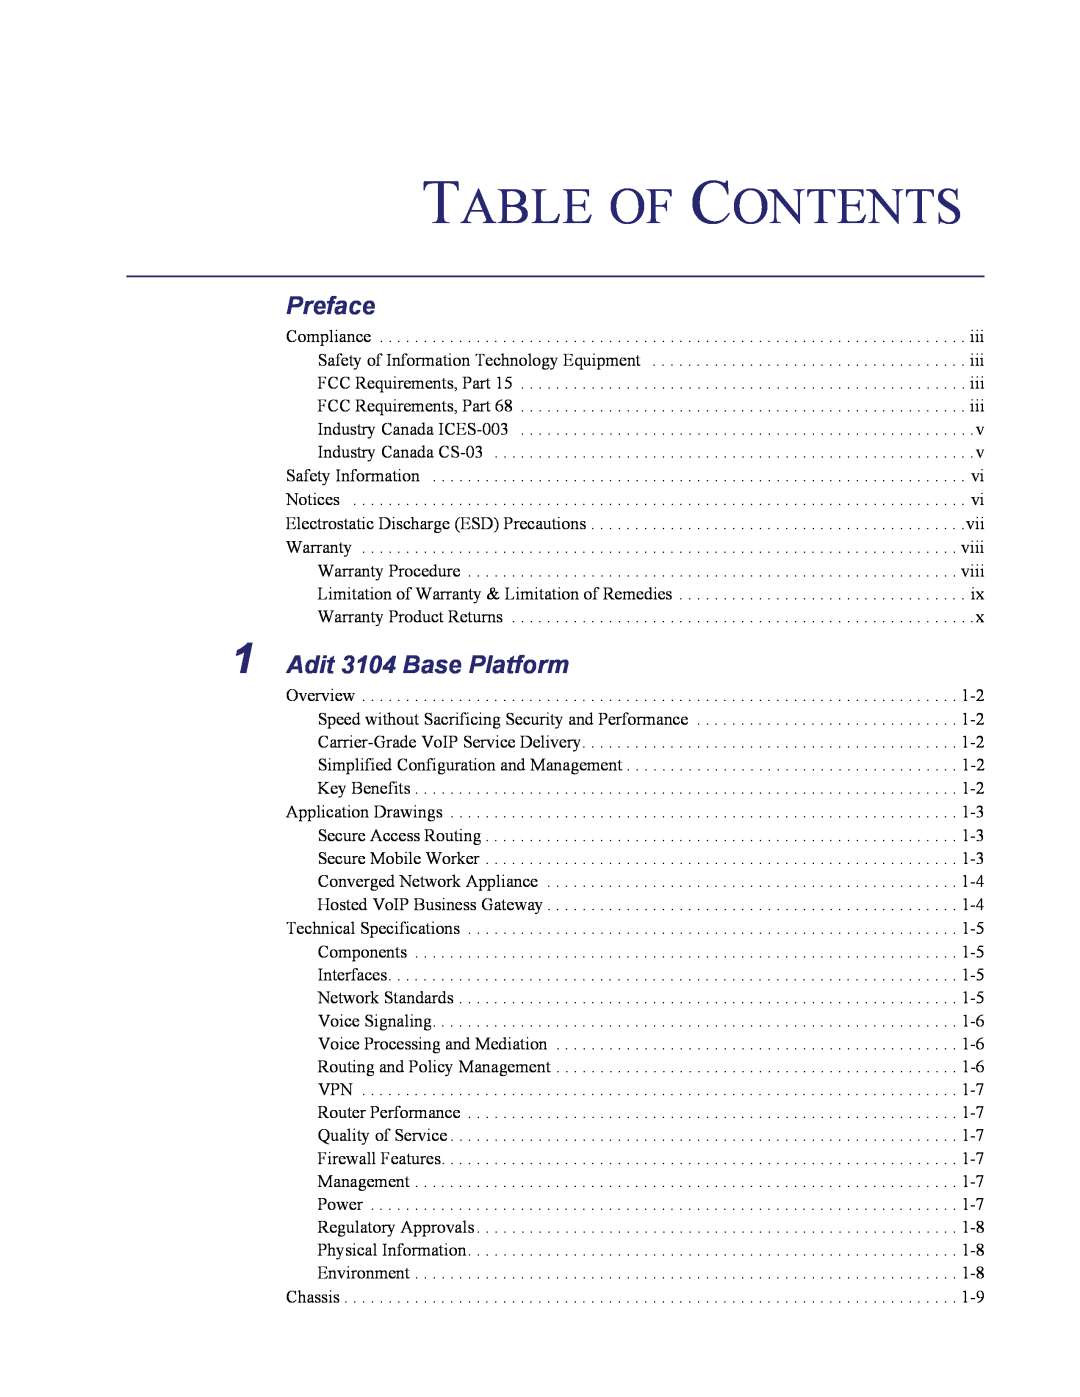 Carrier Access user manual Table Of Contents, Preface, Adit 3104 Base Platform 